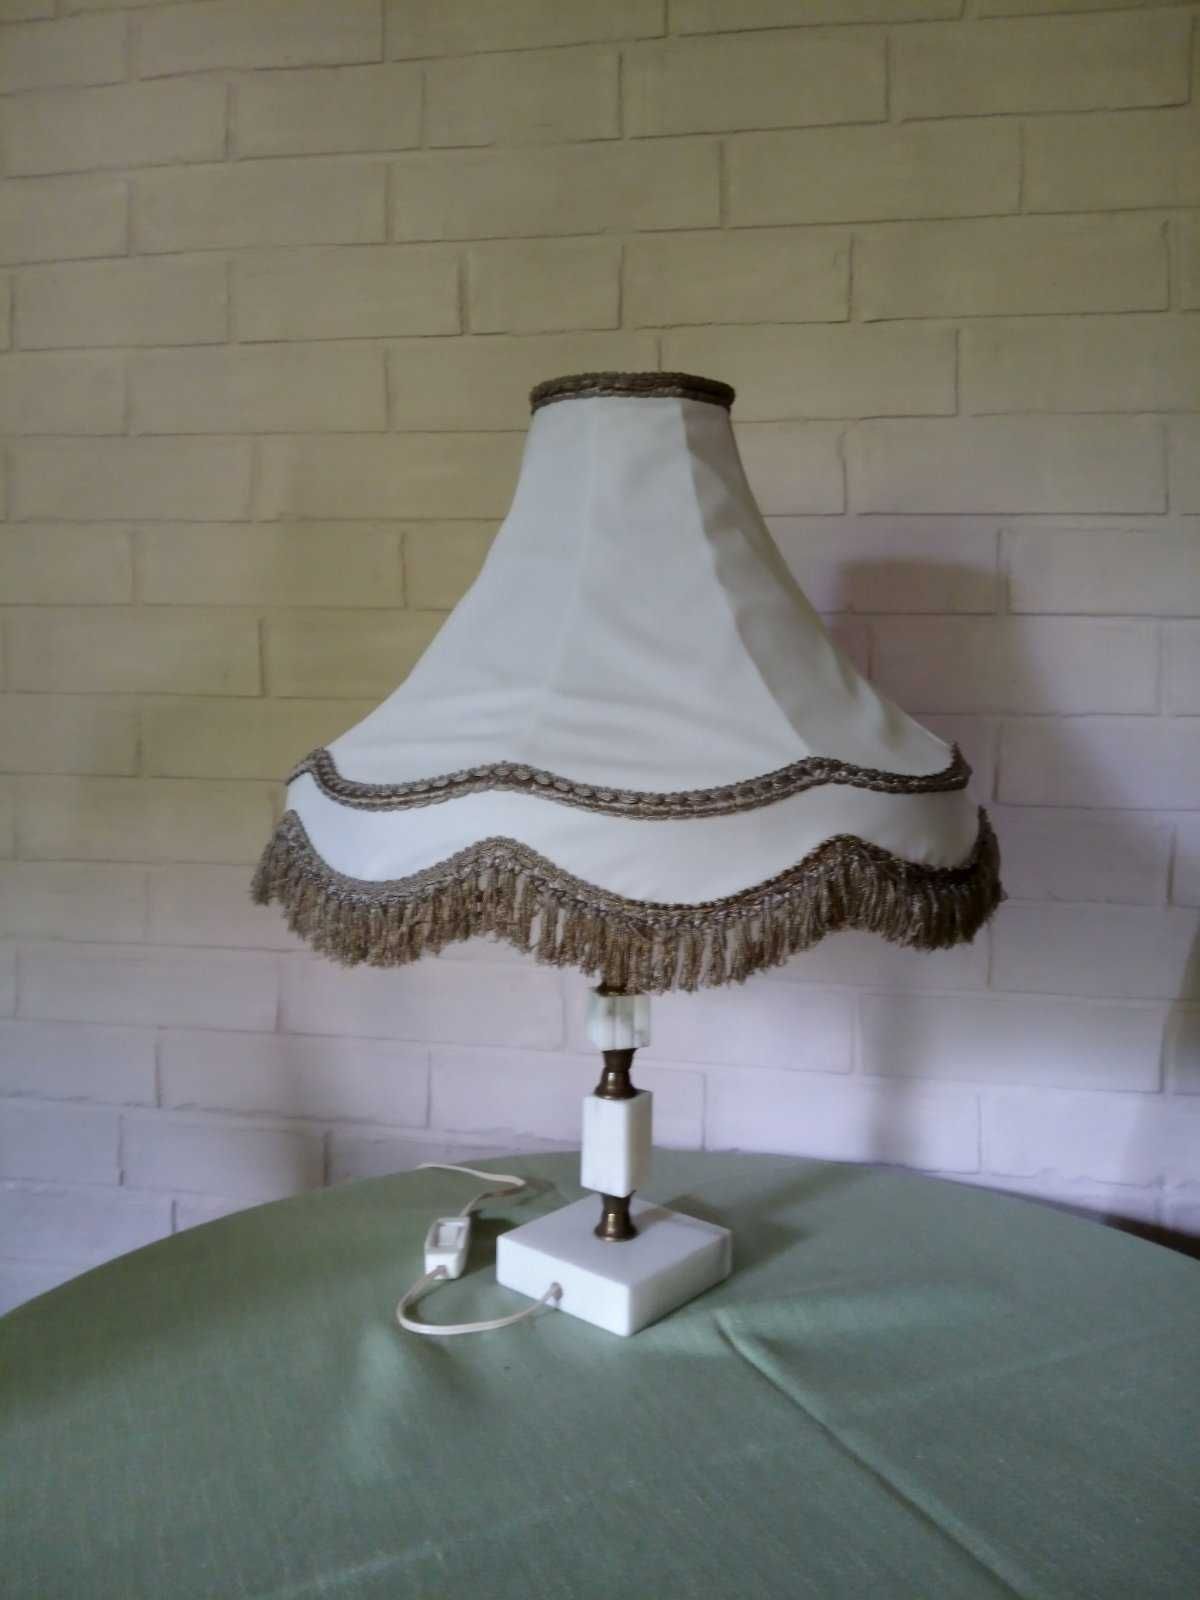 Настолна лампа за дома